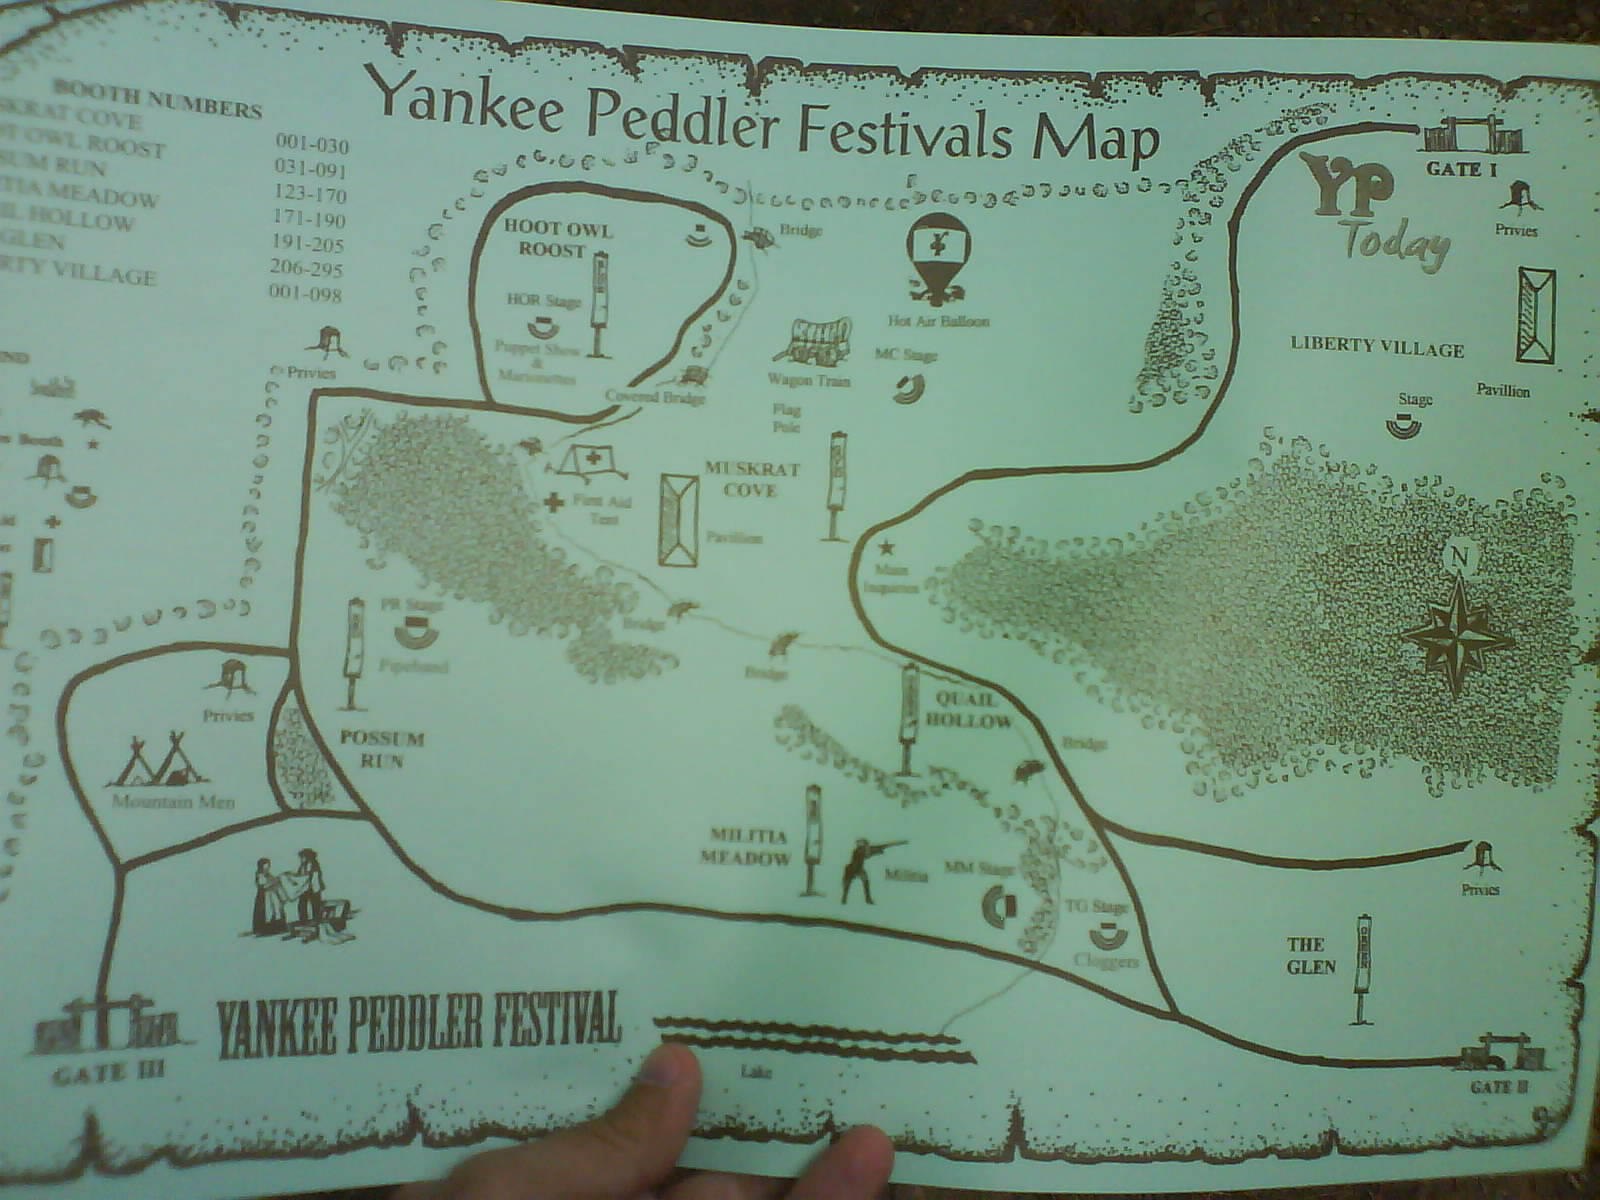 Yankee Peddler Festival Canal Fulton, Ohio